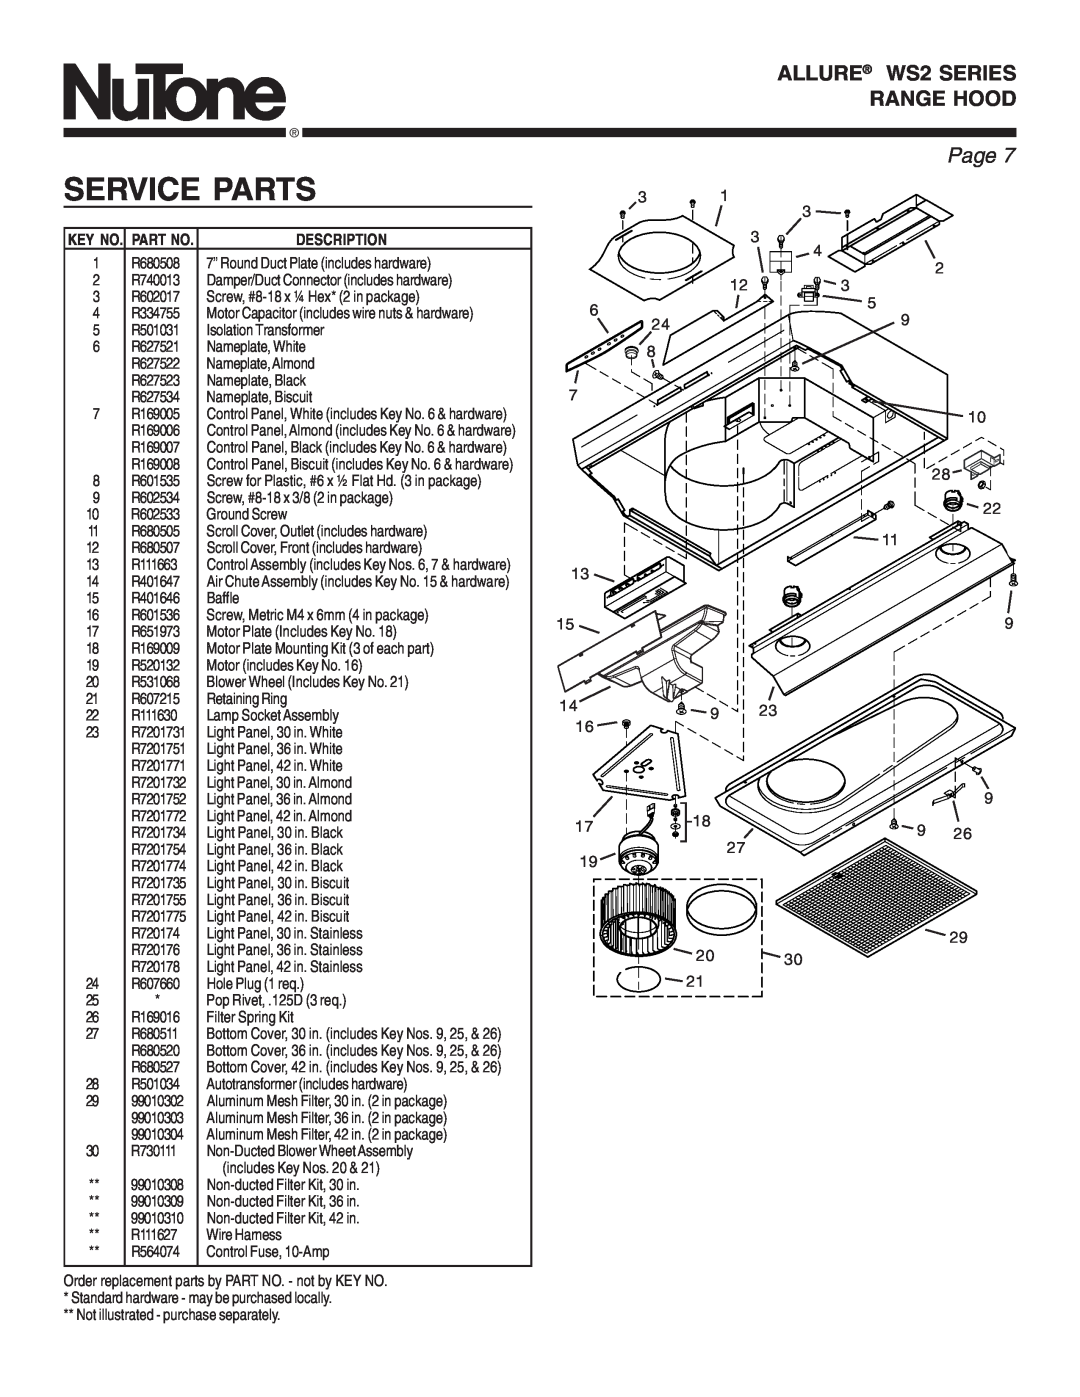 NuTone manual Service Parts, ALLURE WS2 SERIES RANGE HOOD, Page, Key No. Part No 